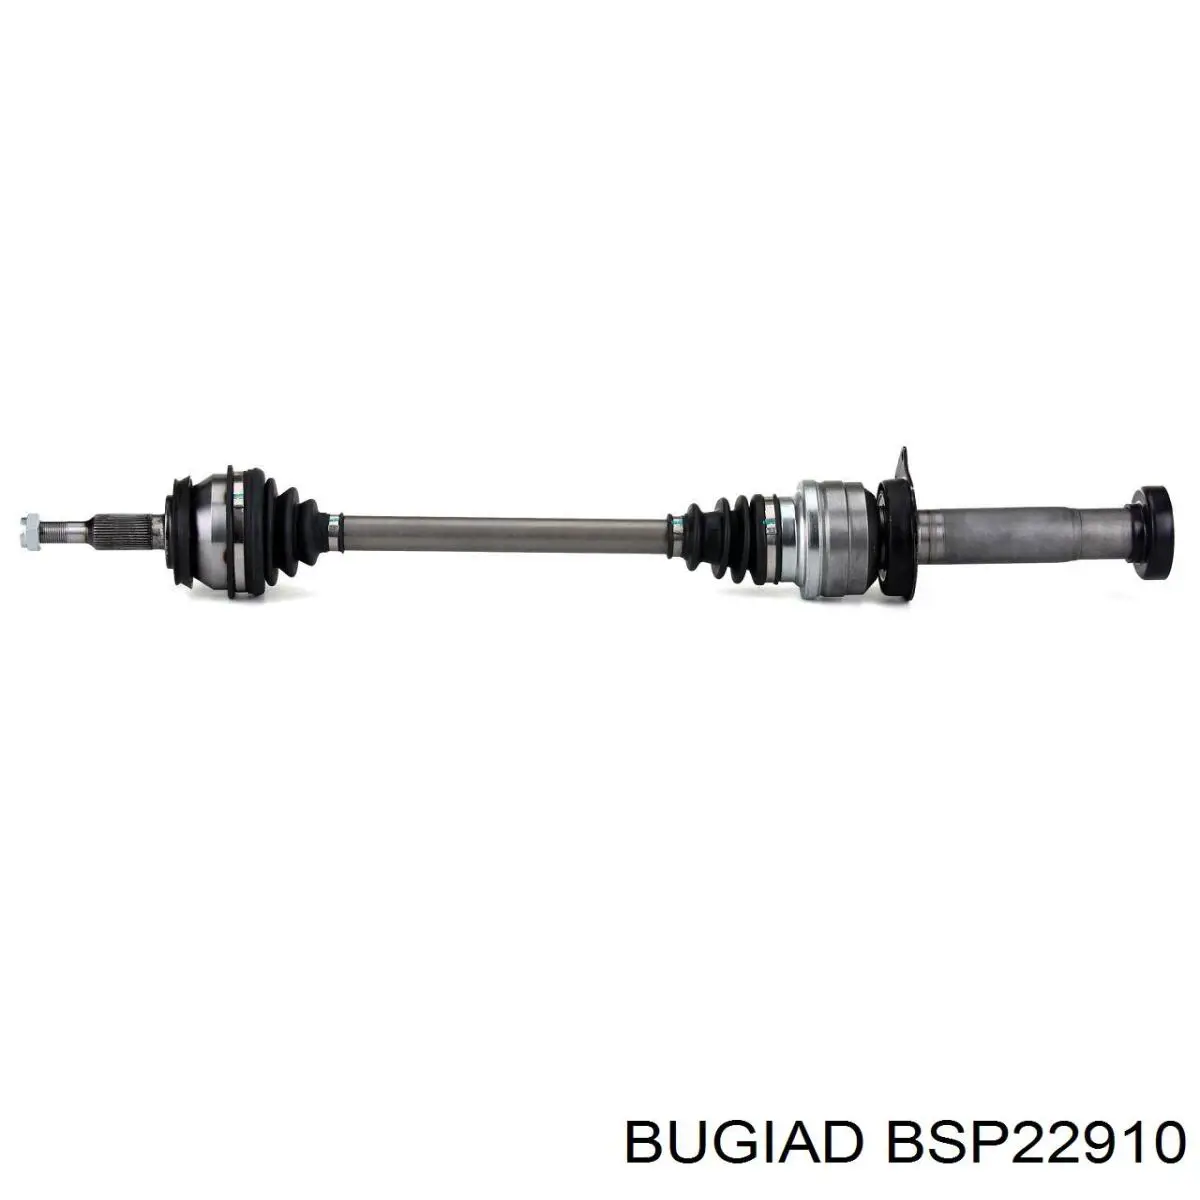 BSP22910 Bugiad semieje de transmisión intermedio